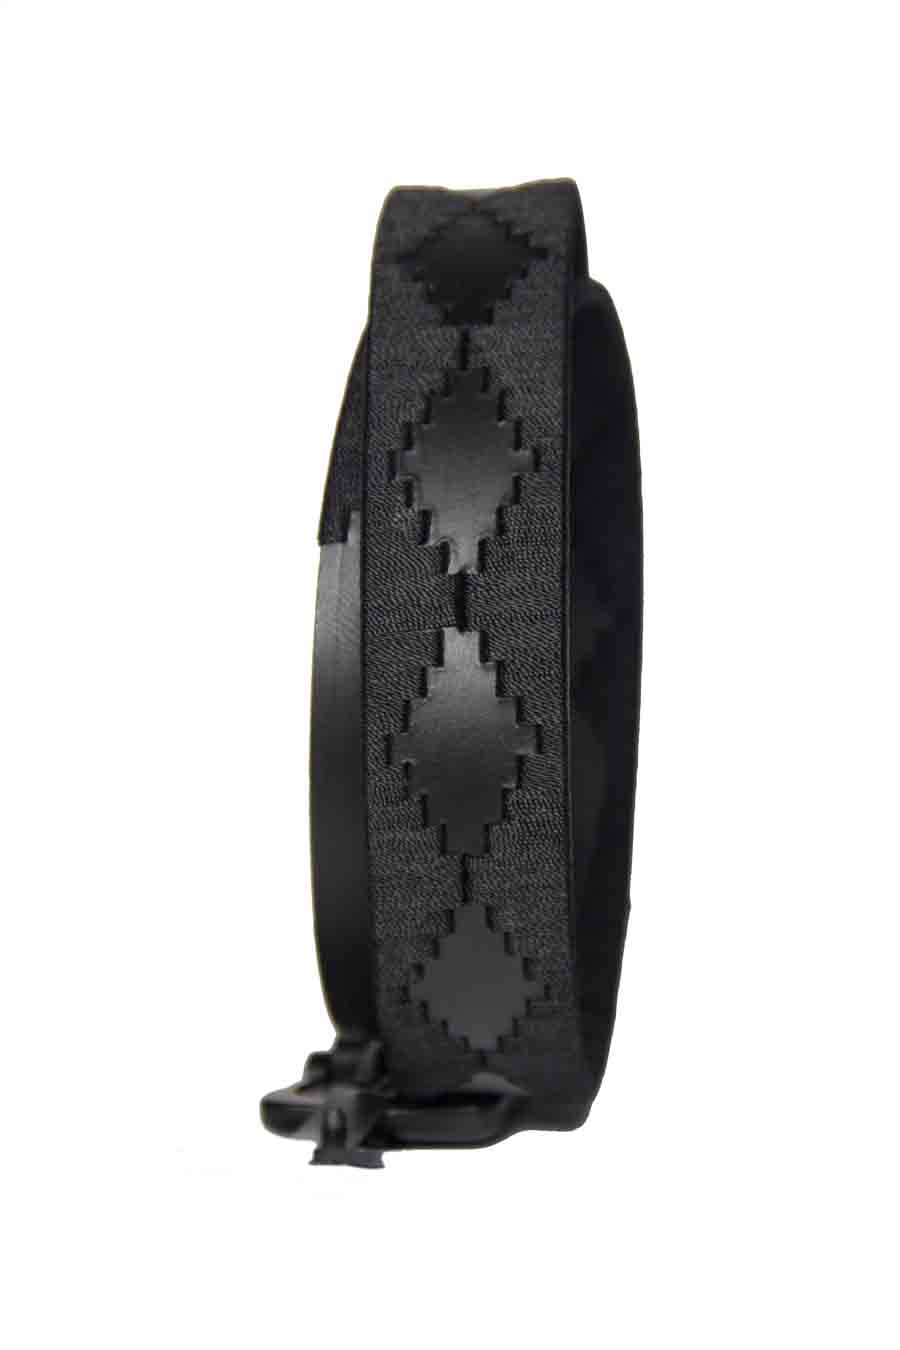 Osprey London Mendoza Belt Black Casual Leather Fabric Men's Size 38